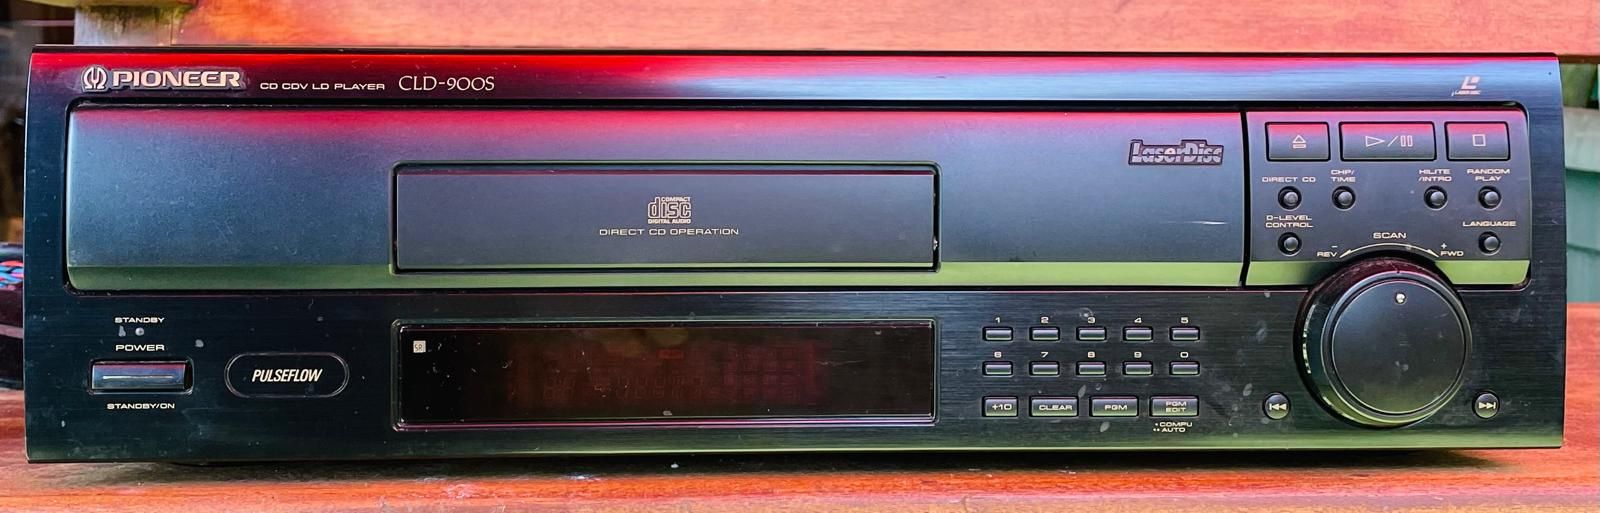 Pioneer CLD-900S LaserDisc Player